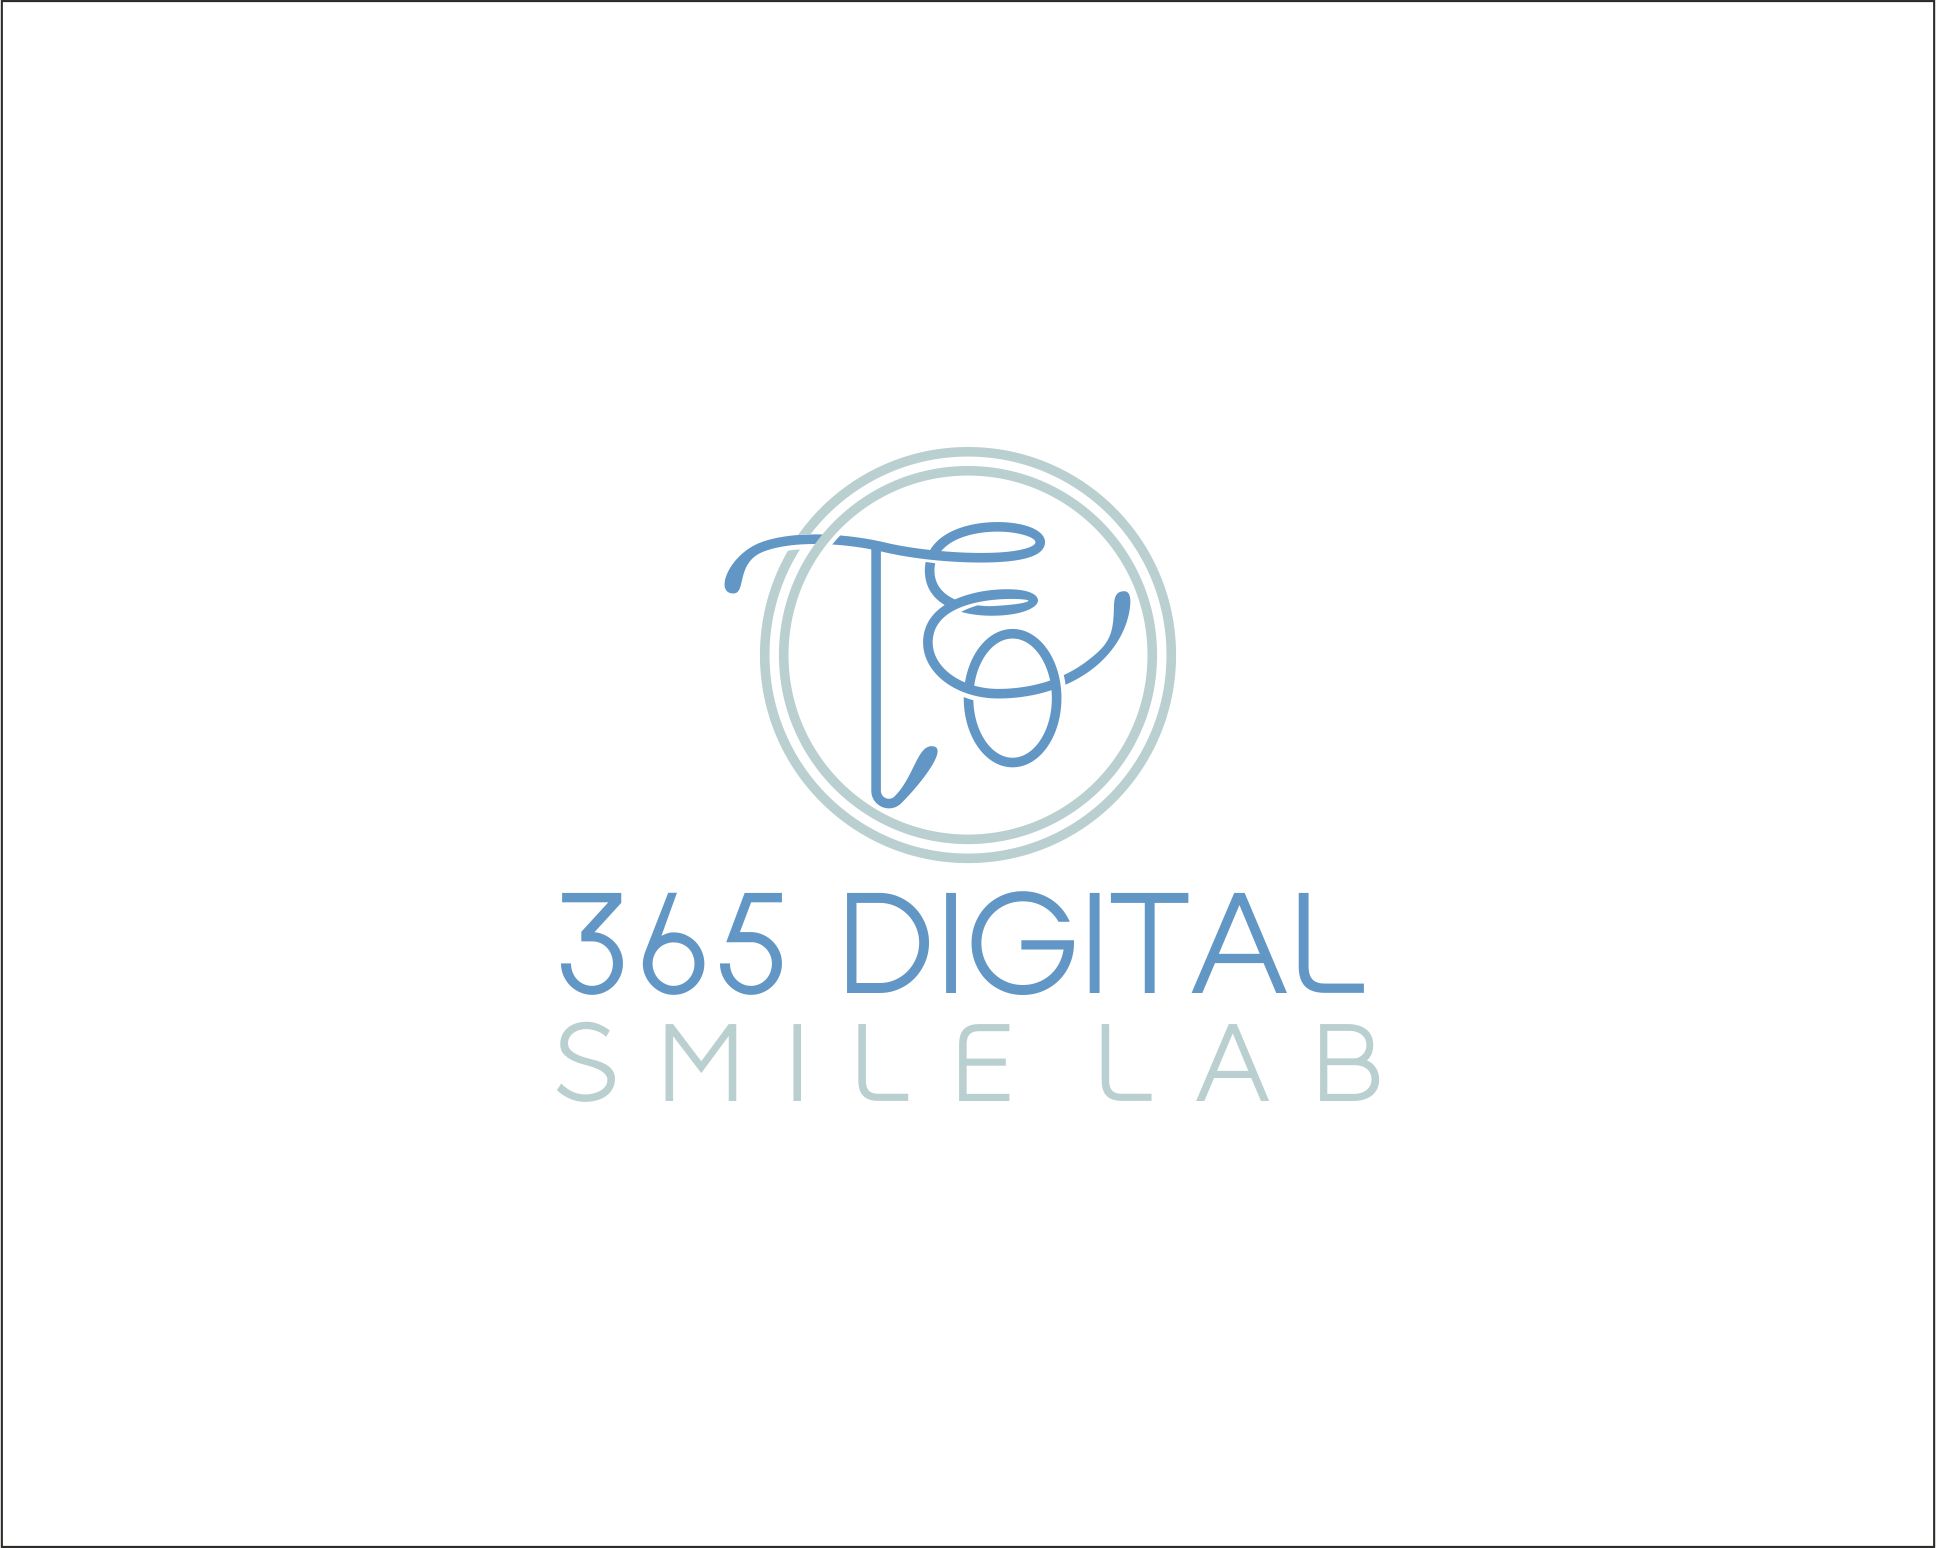 Logo Design entry 1585877 submitted by jangAbayz to the Logo Design for 365 Digital Smile Lab run by kimberly@atlantadentalspa.com